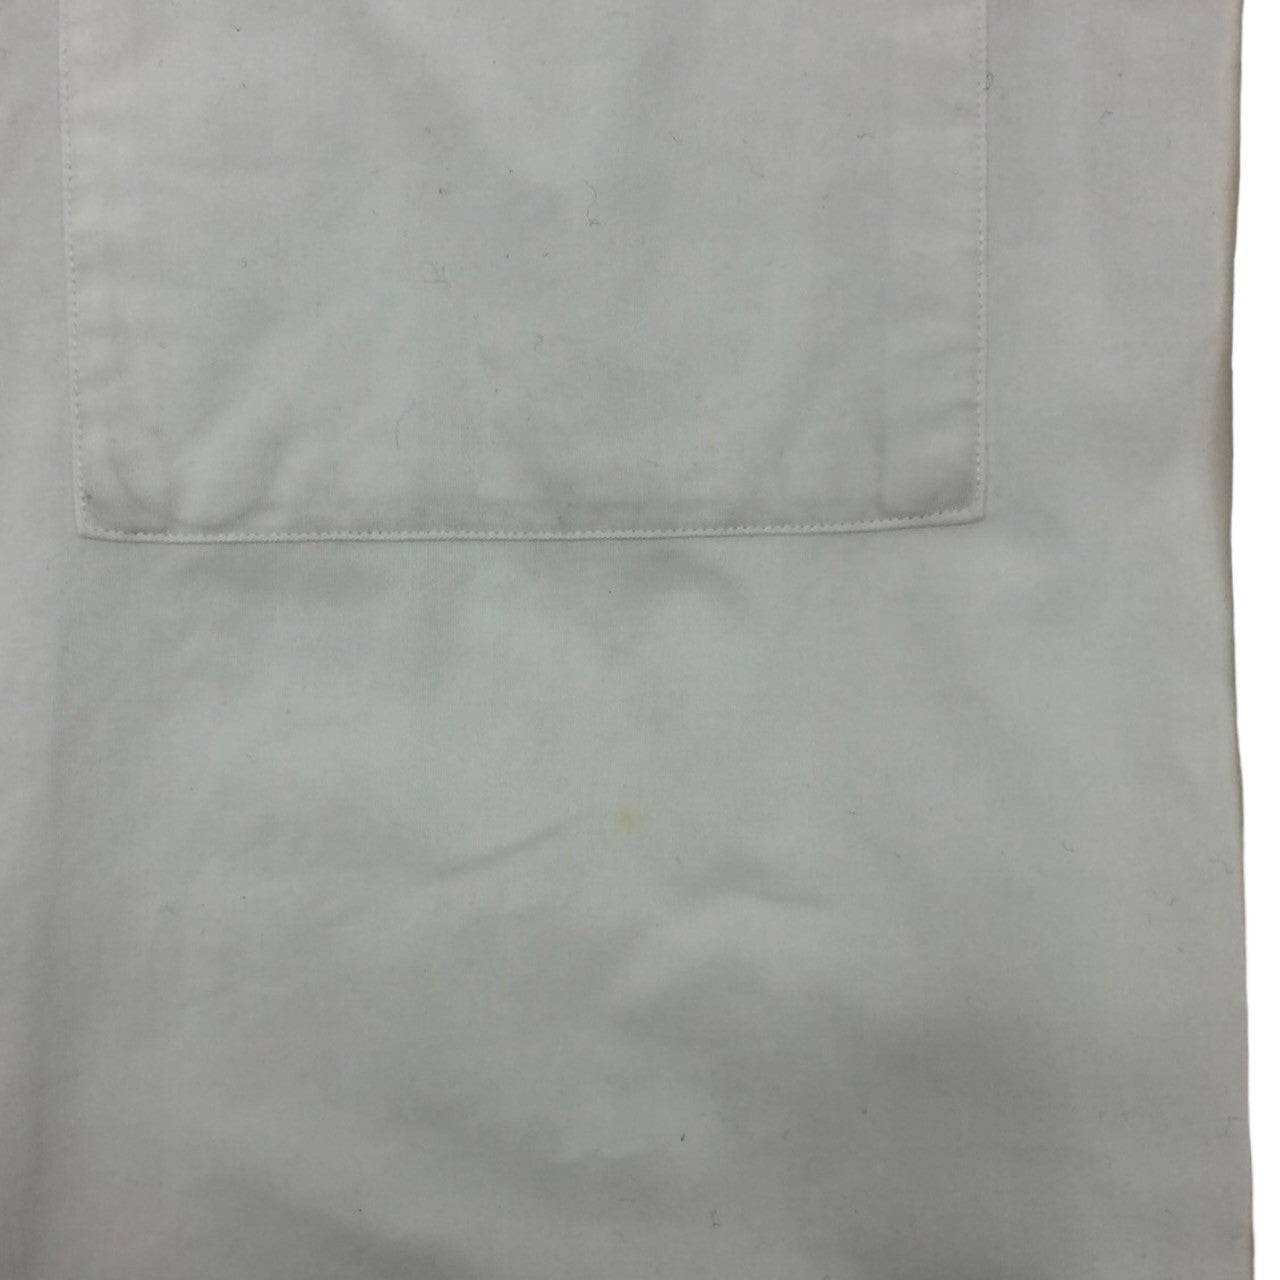 SUNSEA(サンシー) 2 pocket regular collar shirt/2ポケット比翼レギュラーカラーシャツ SNS-13A11 2(Mサイズ程度) ホワイト